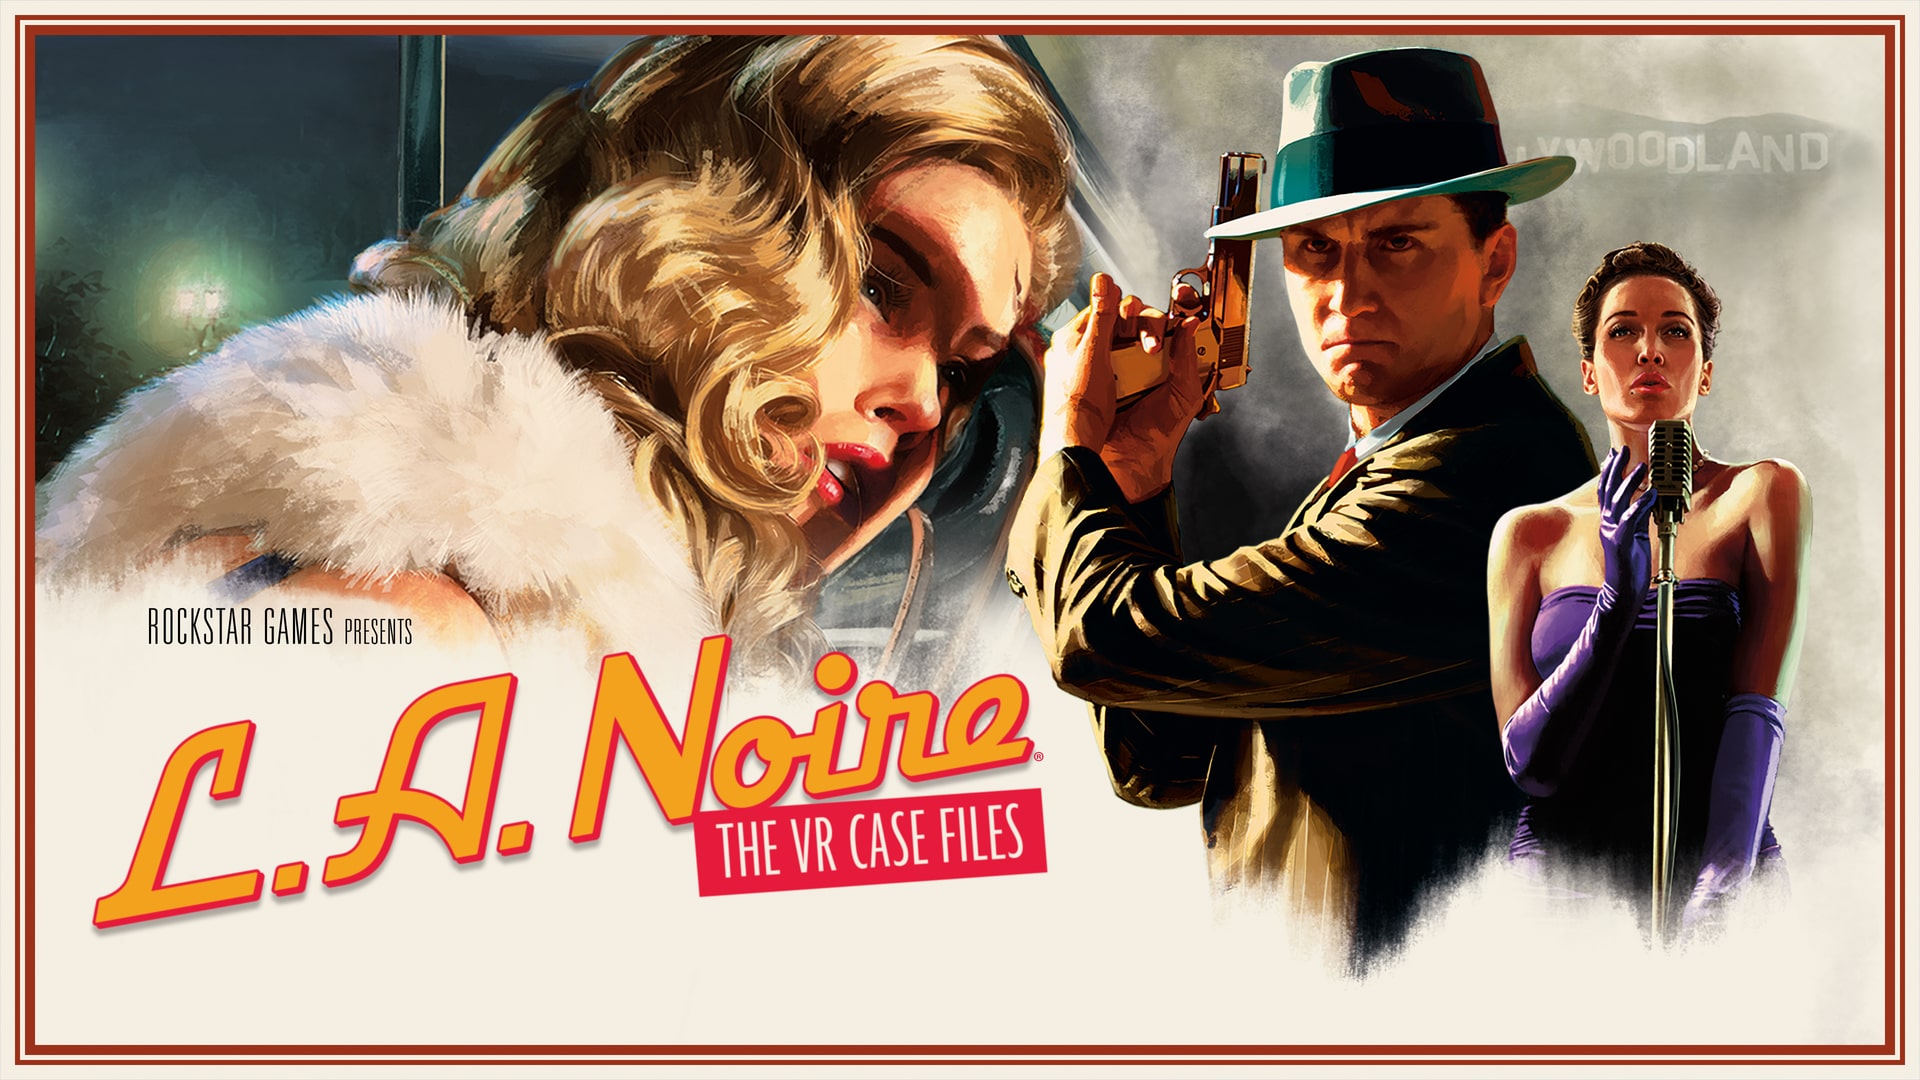 L.A. Noire: The VR Case Files (English Ver.)